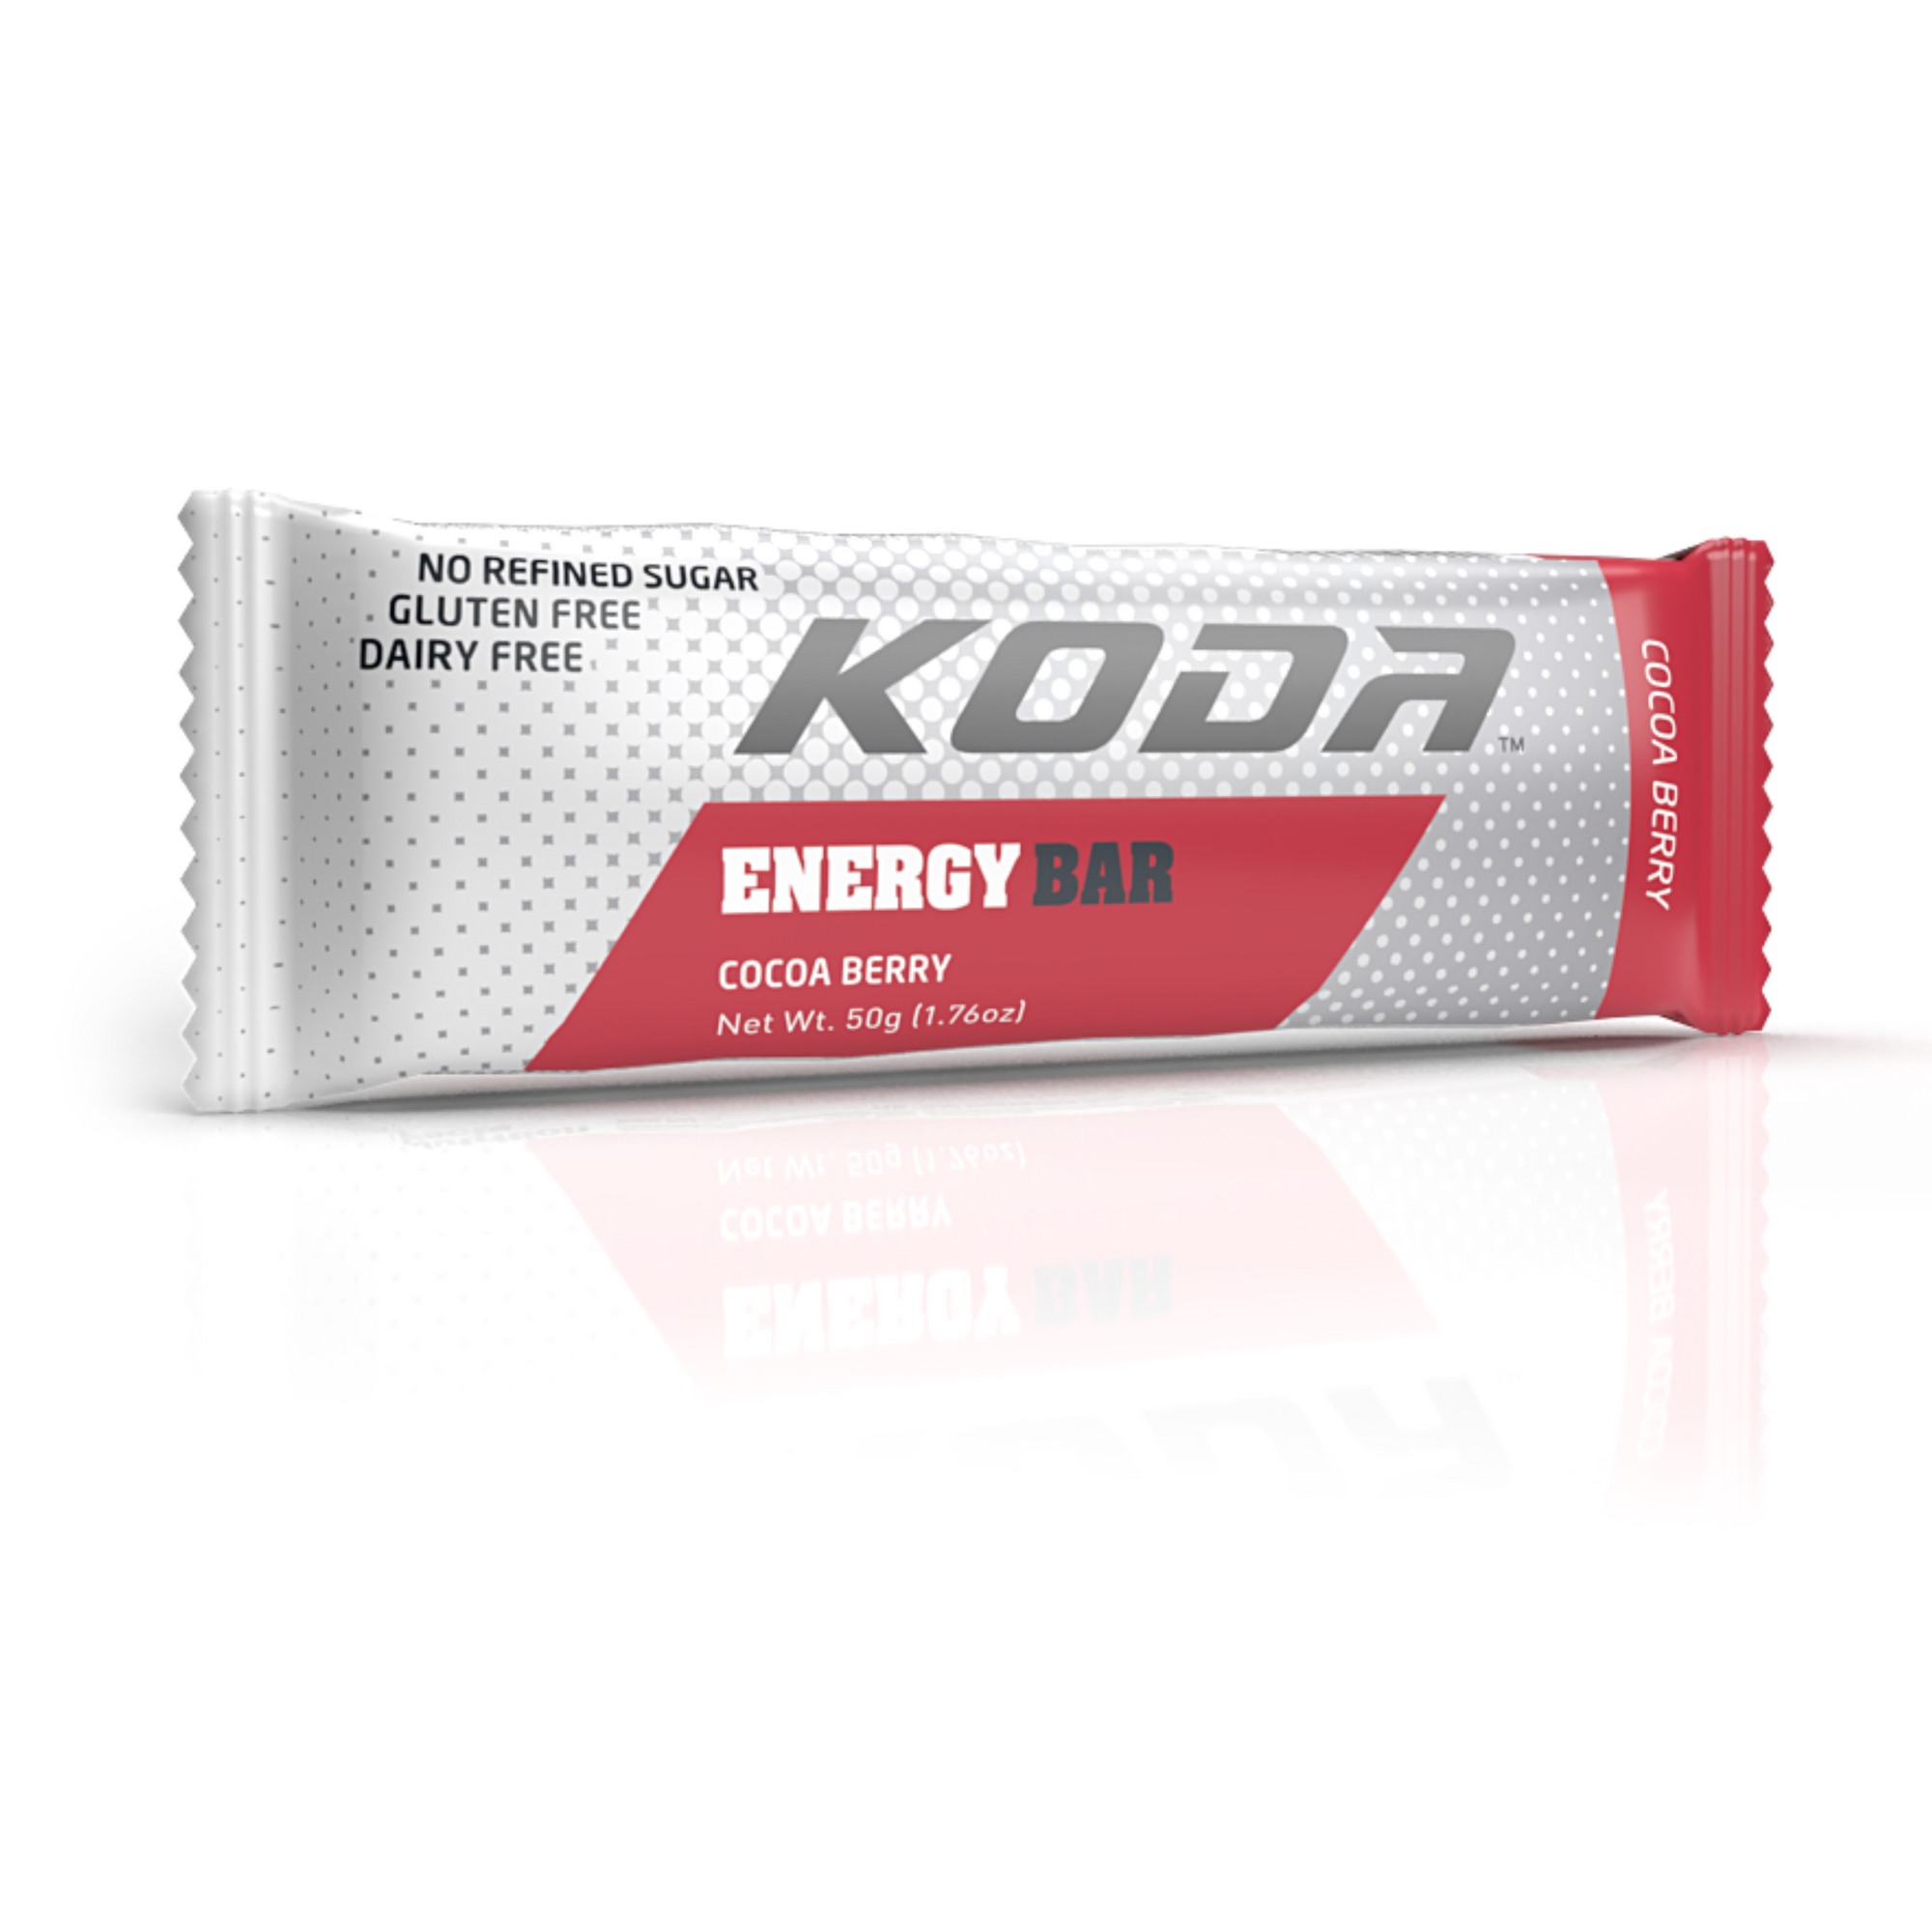 Cocoa Berry - KODA Energy Bar (12 pack)